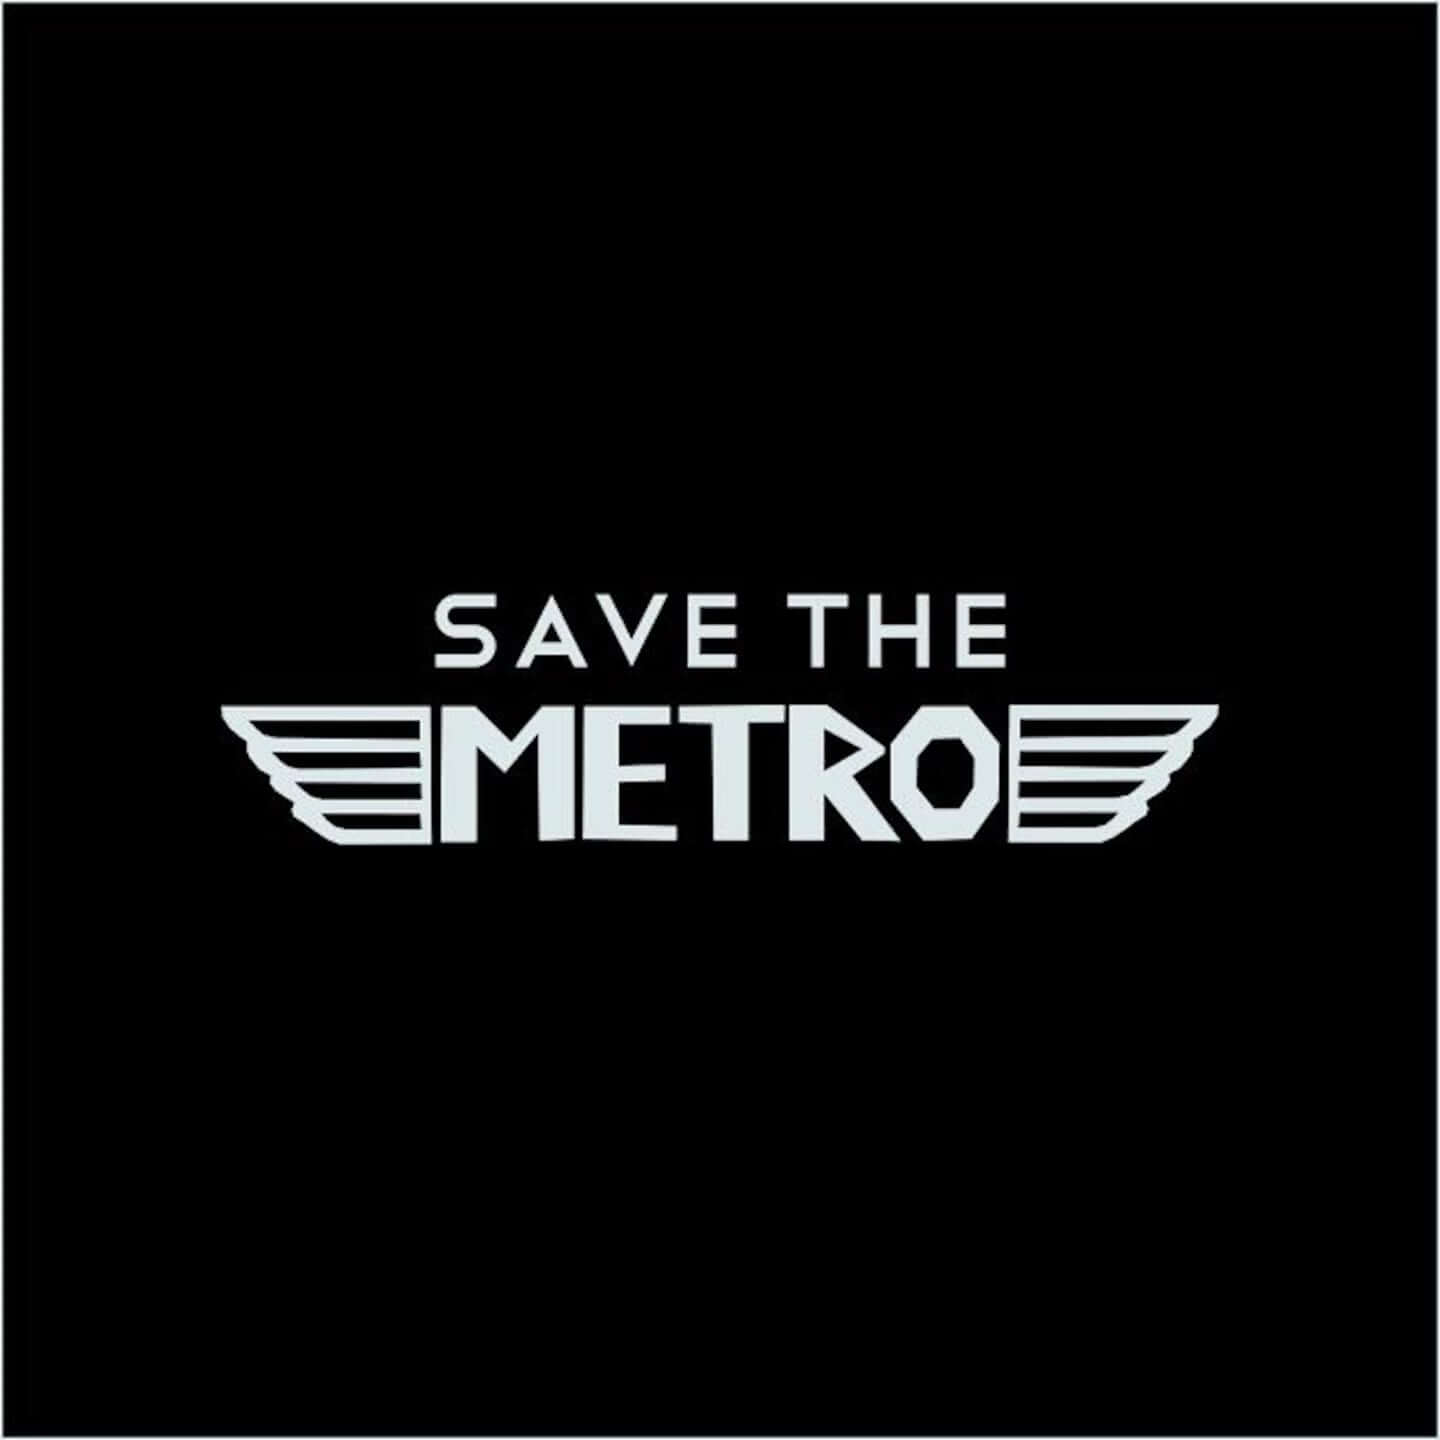 Save The Metro